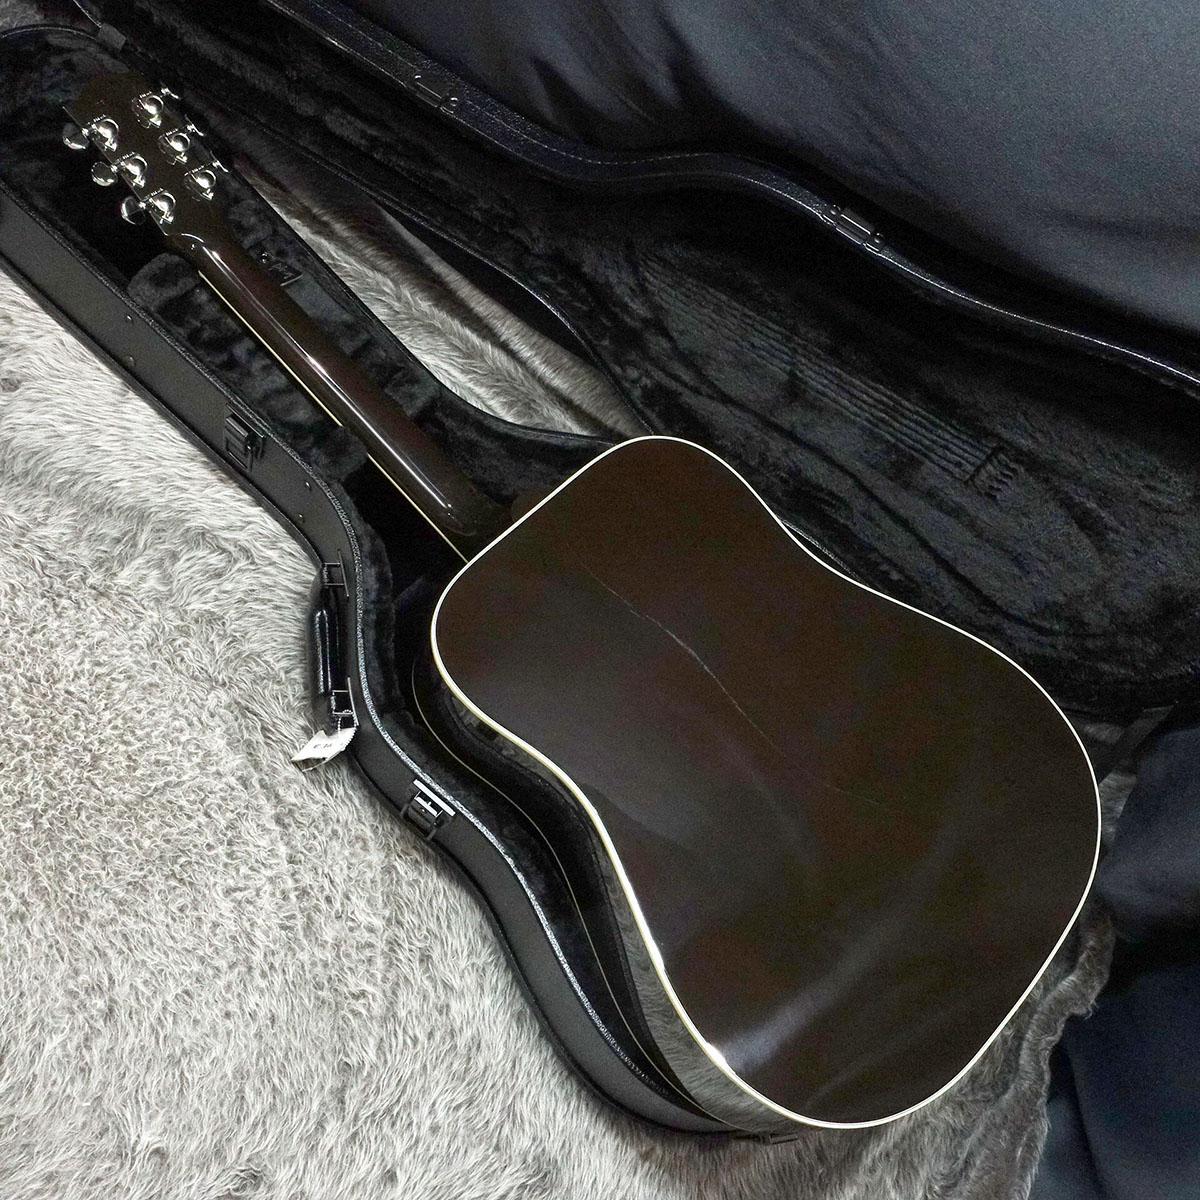 Gibson Hummingbird Standard Vintage Sunburst